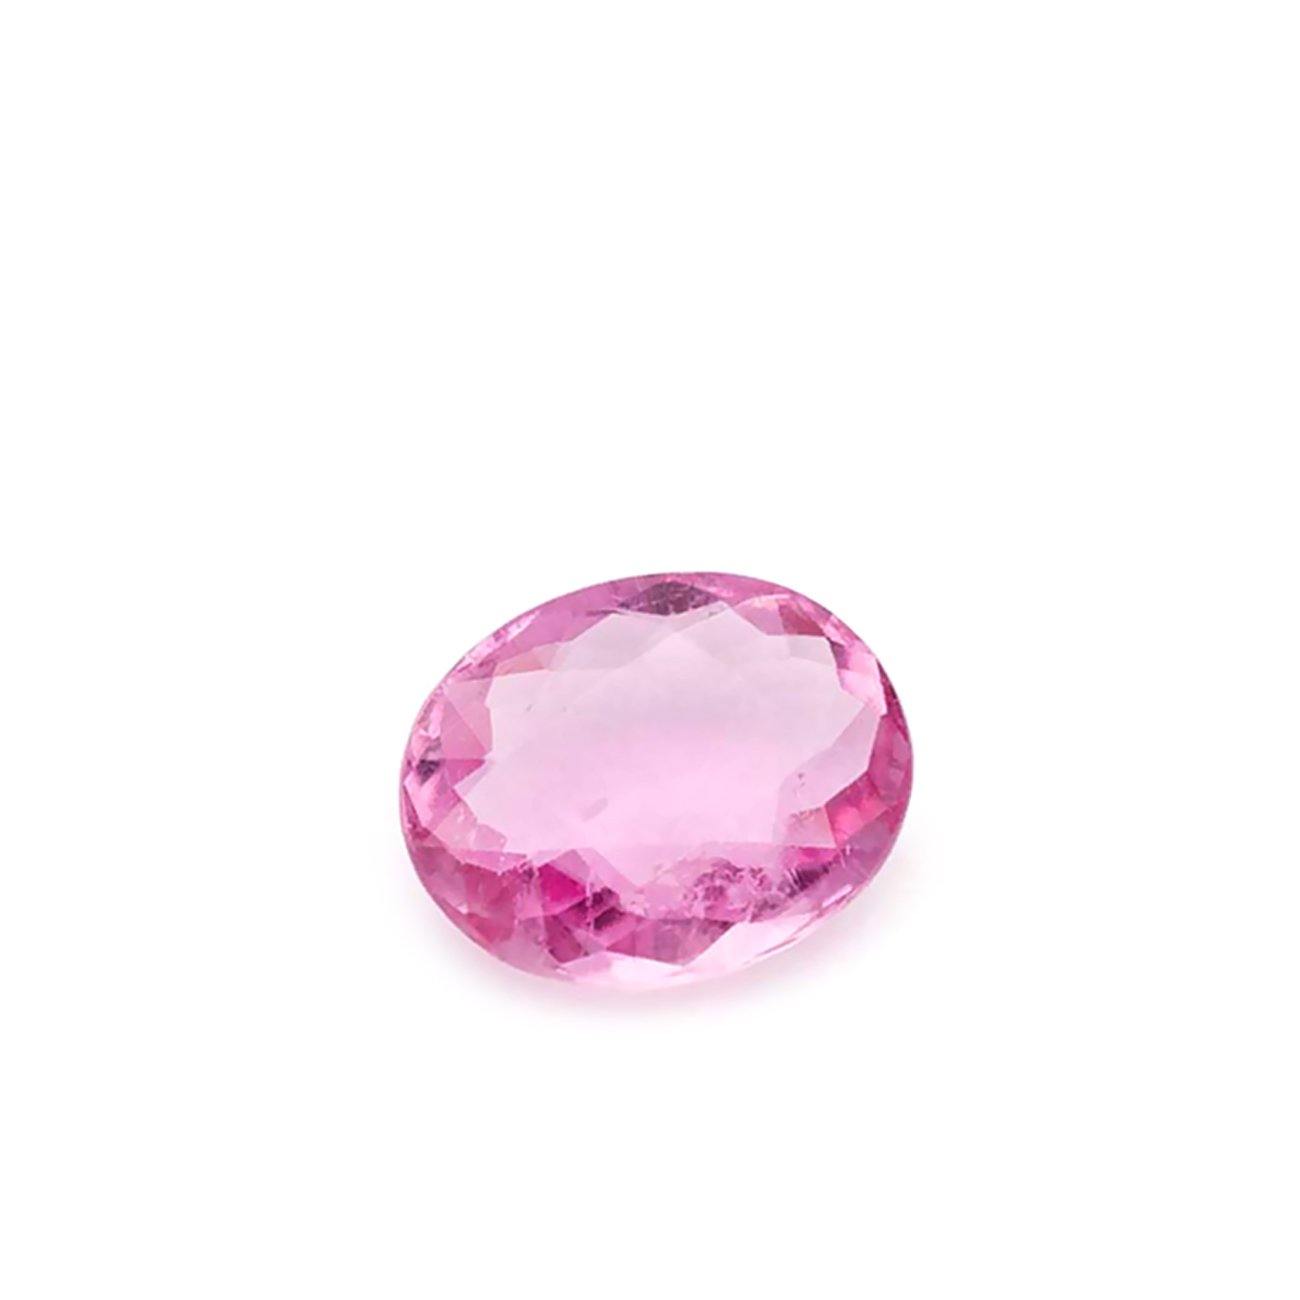 3.78 Carats Fine & Lovely Pink Natural Tourmaline Loose Gemstone Oval Cut - Modern Gem Jewelry 